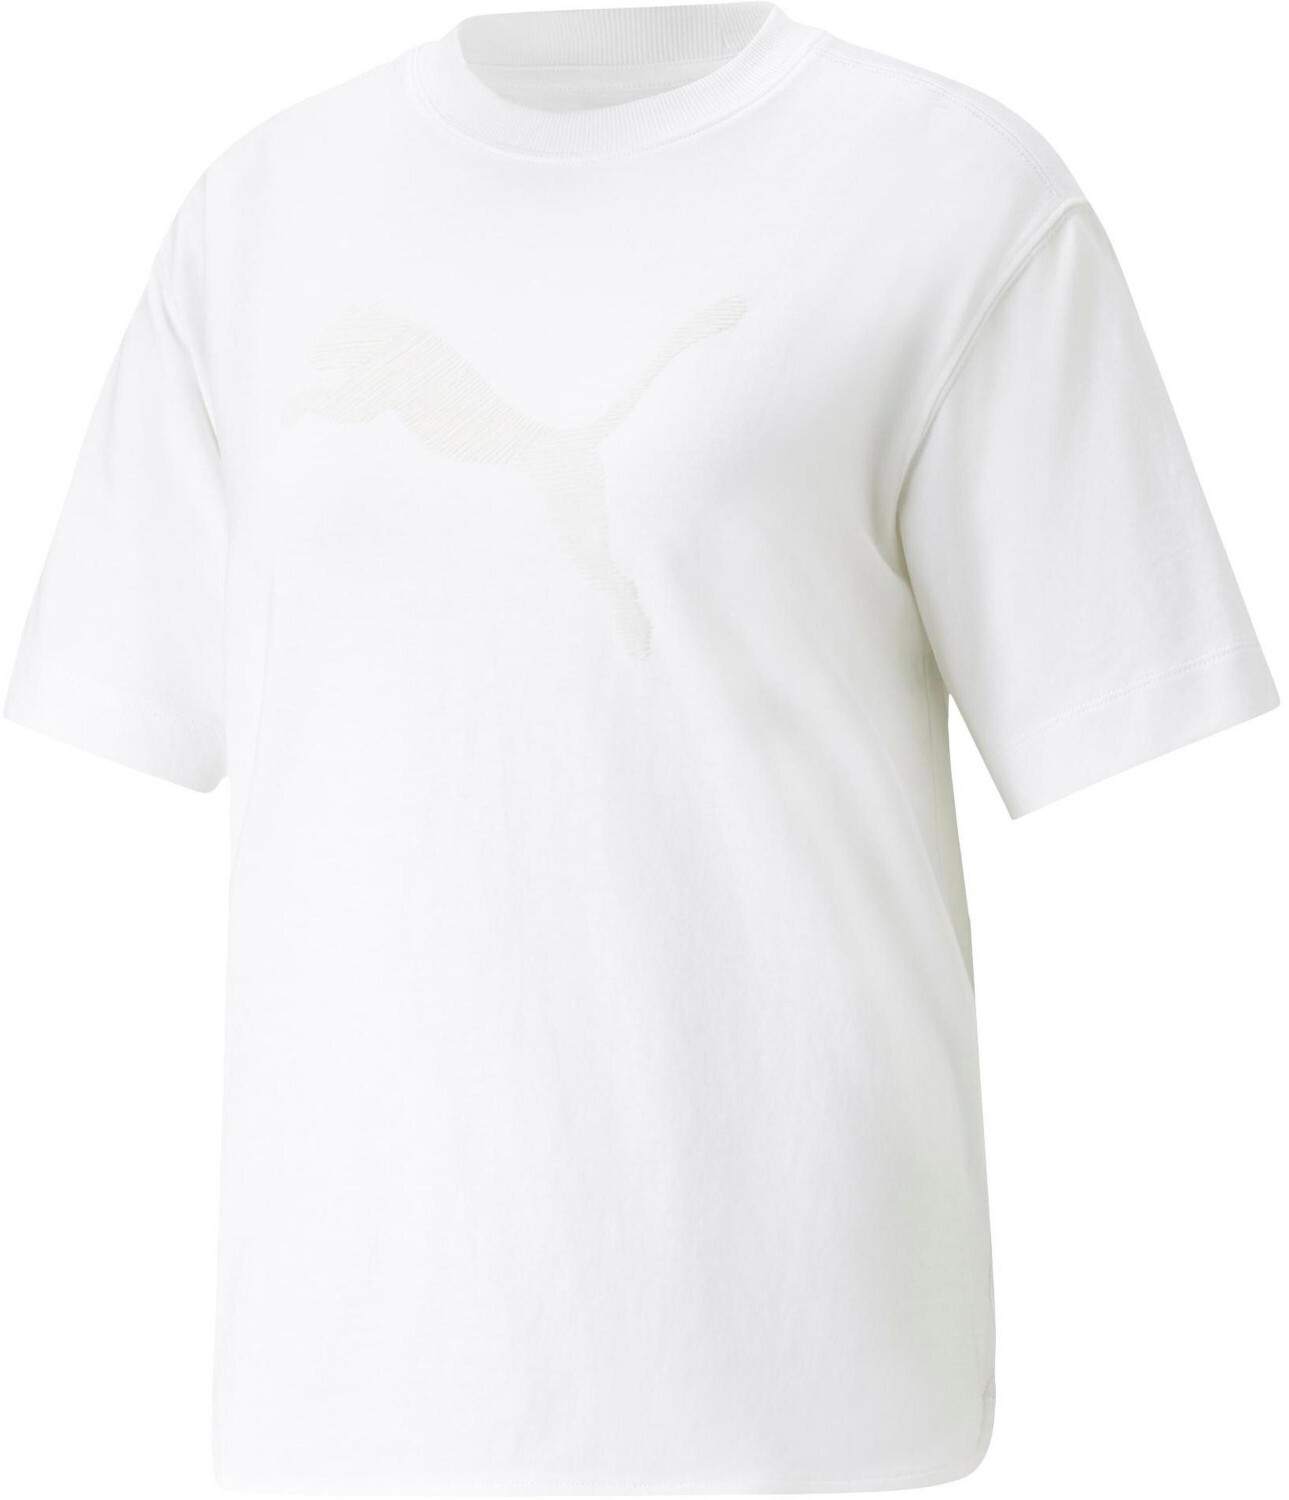 Puma HER T-Shirt Damen (673107) white ab 17,99 € | Preisvergleich bei